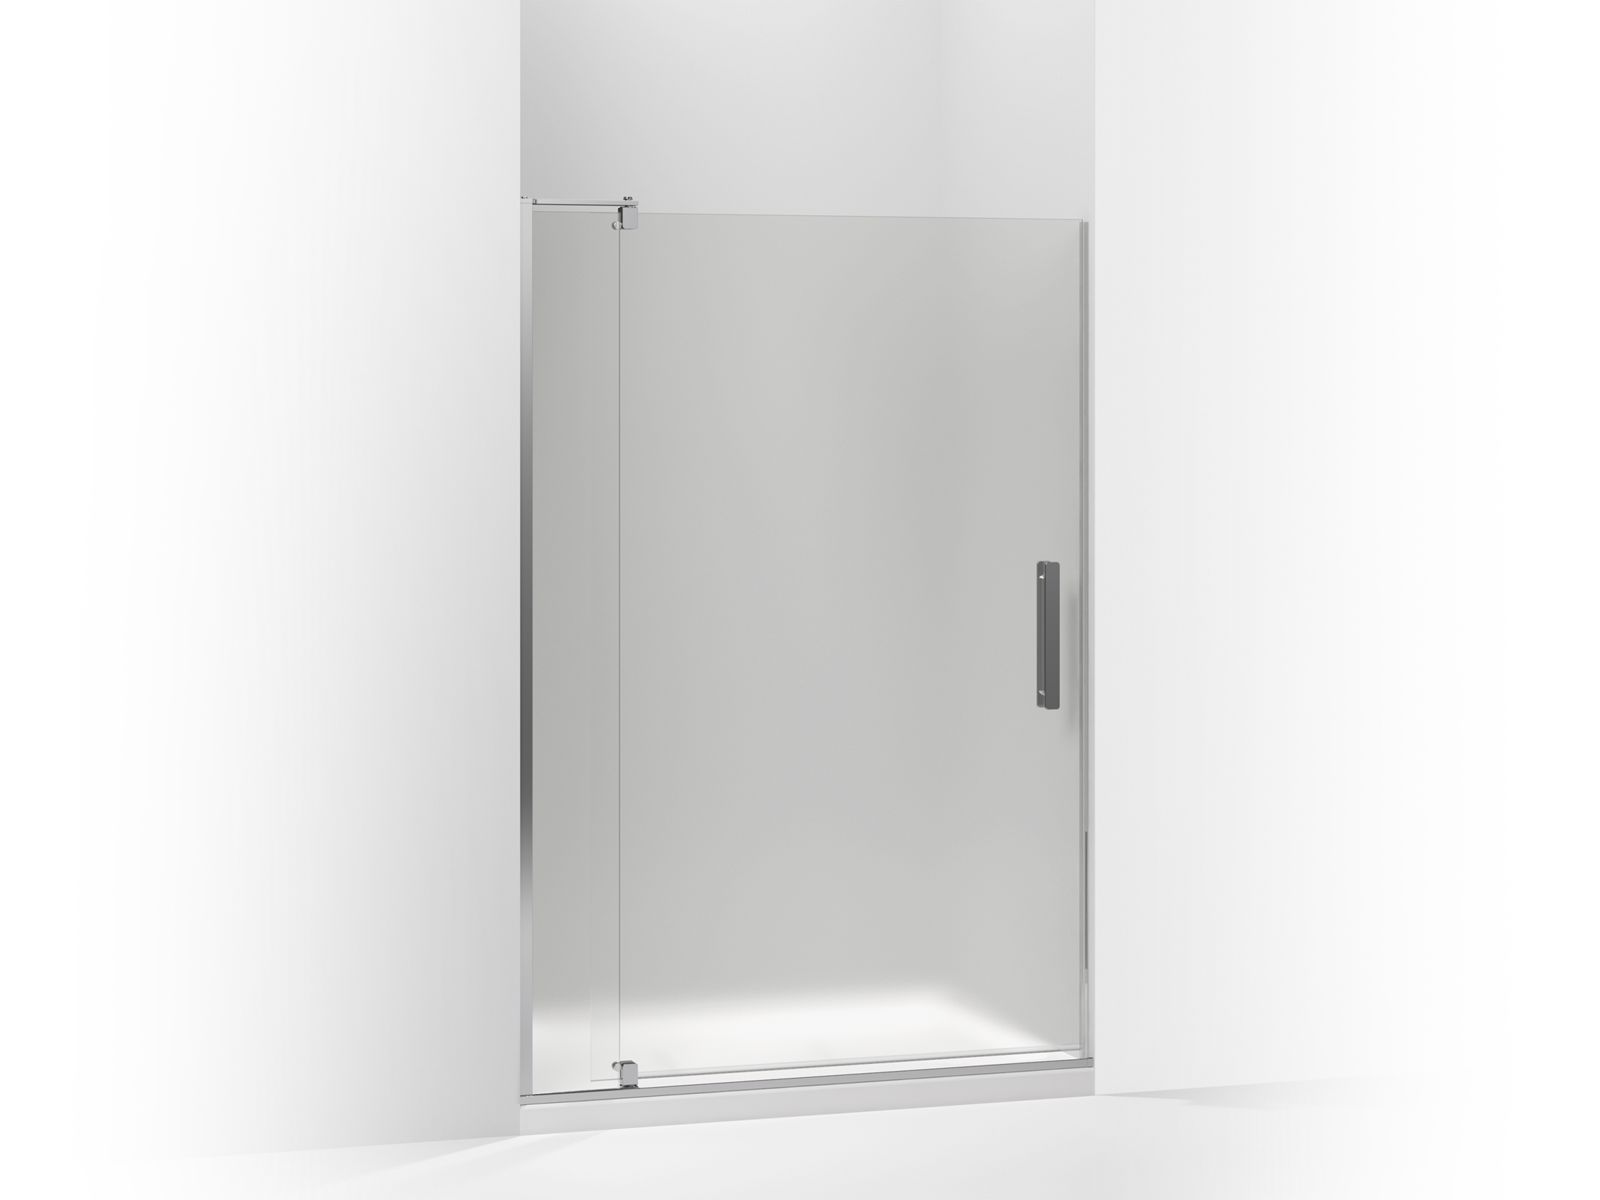 Desain Pintu Shower Kaca